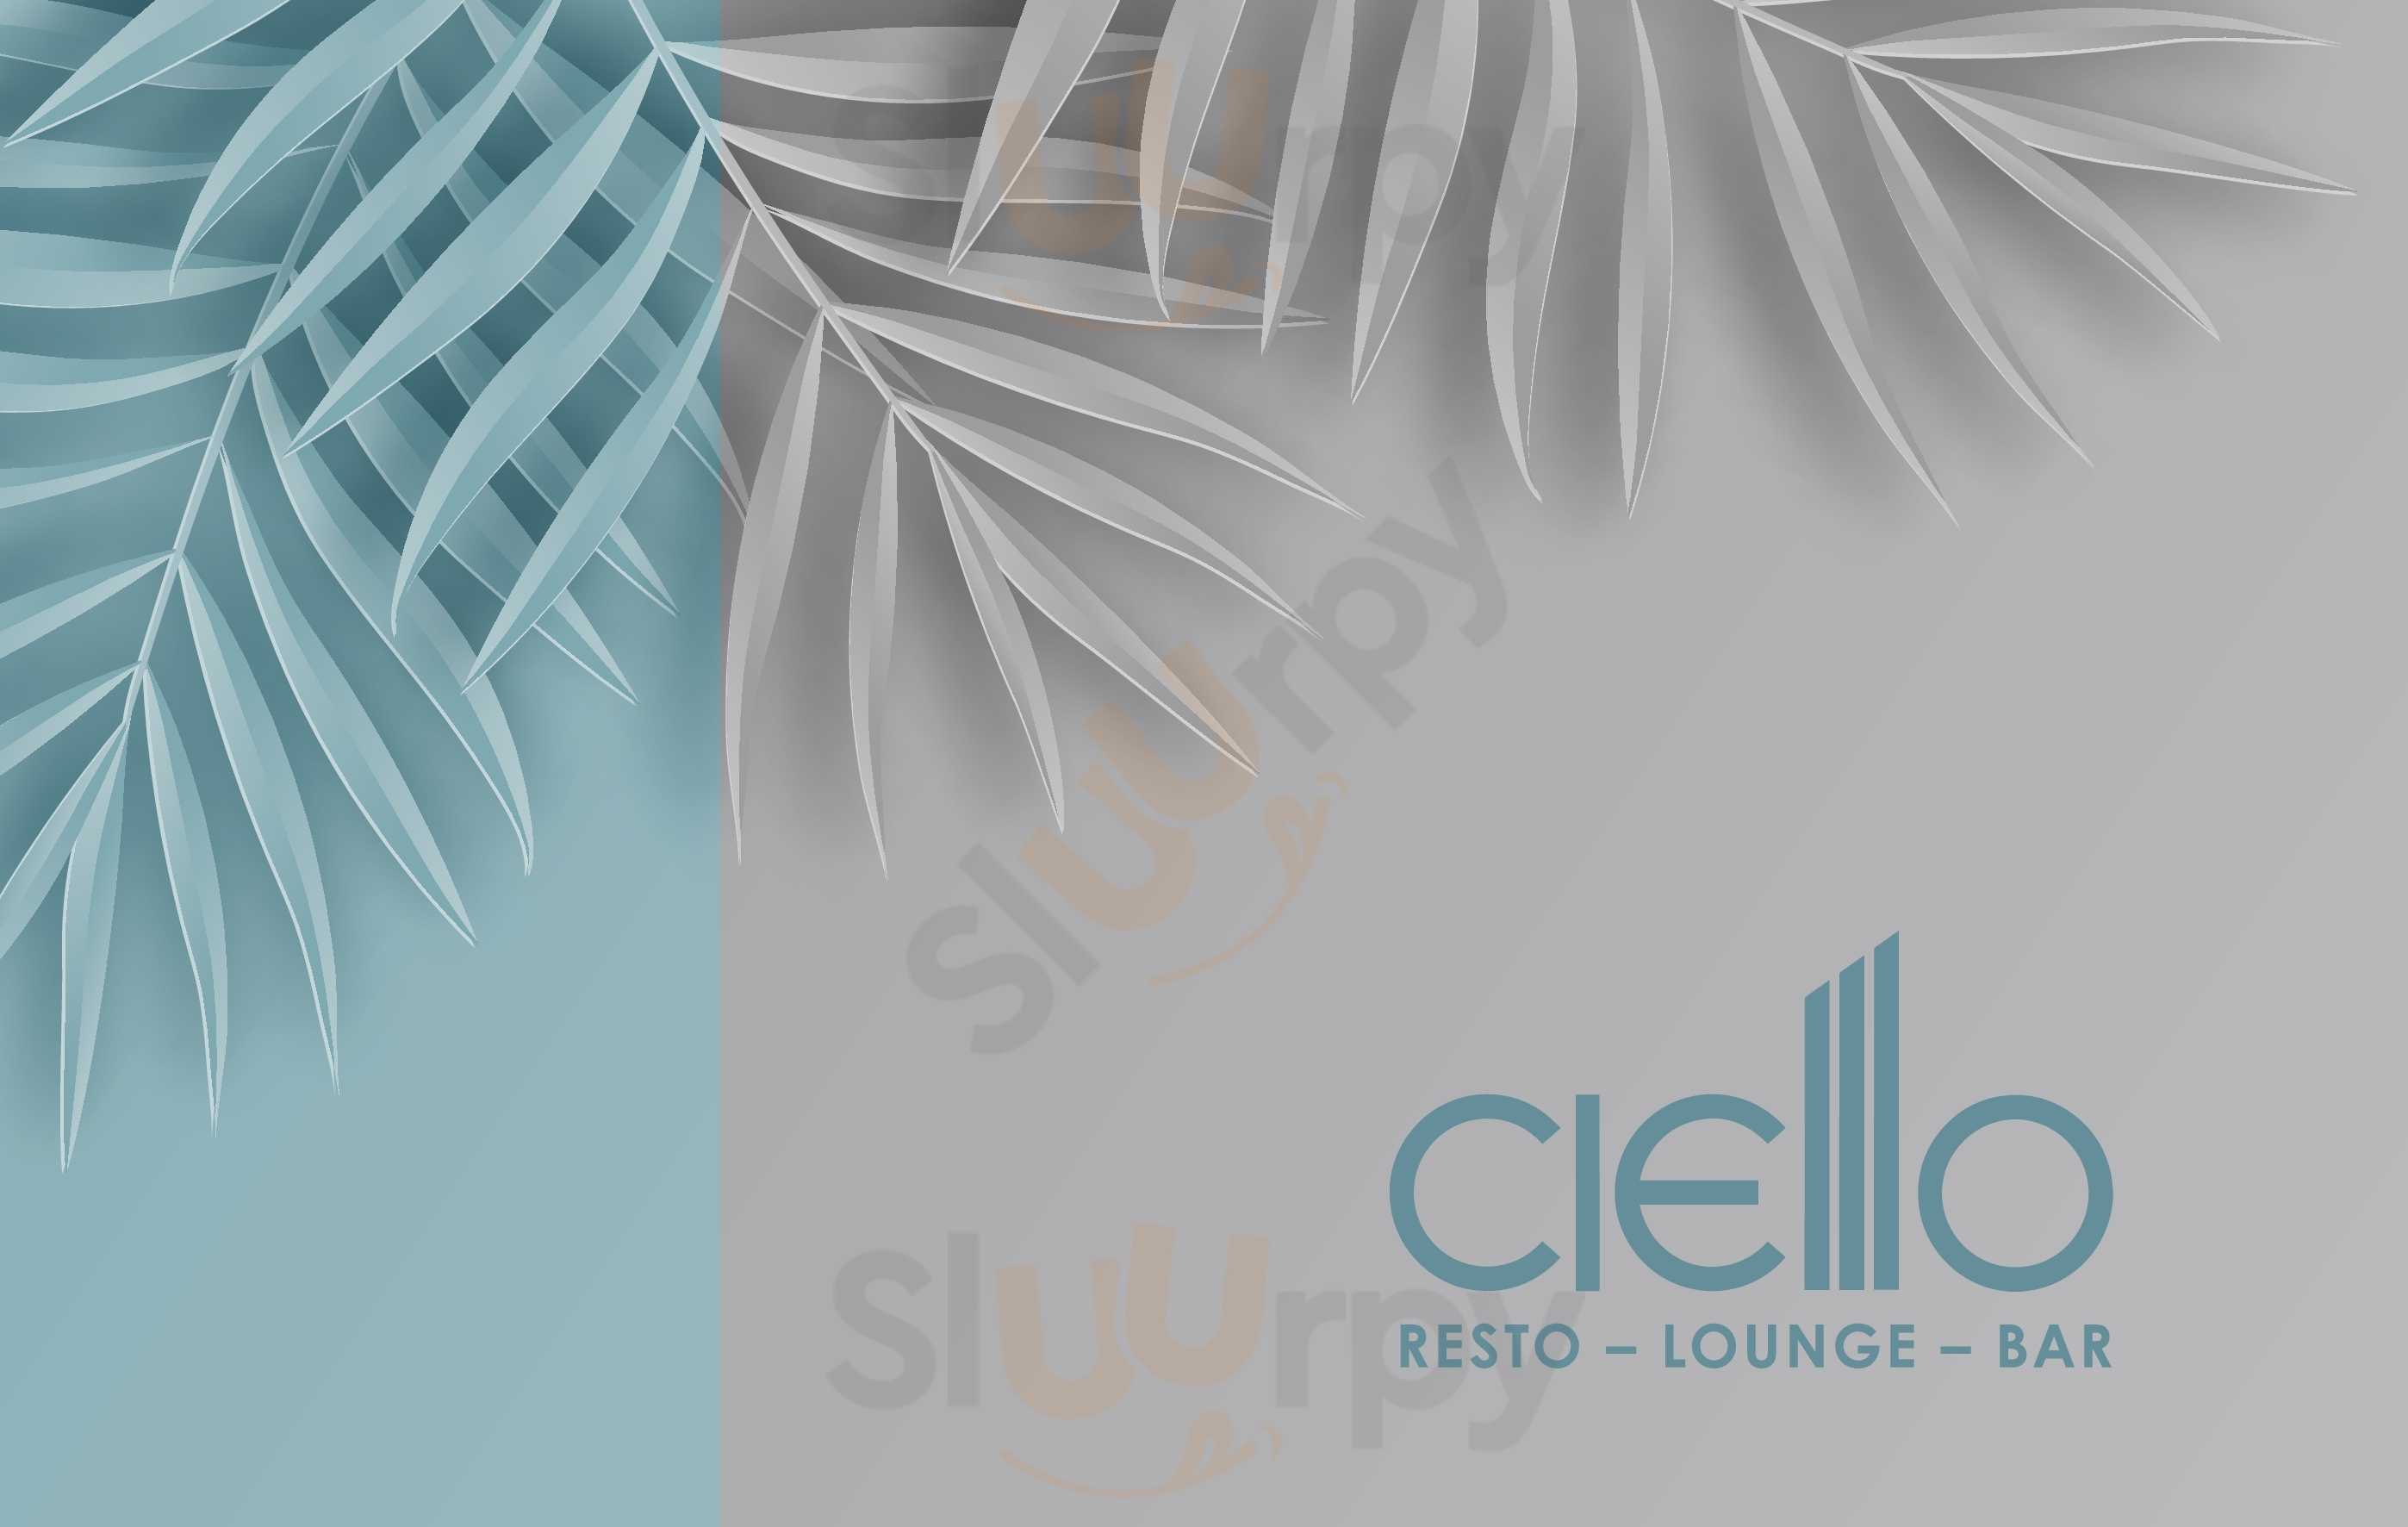 Cielo Resto-lounge-bar Benoni Menu - 1